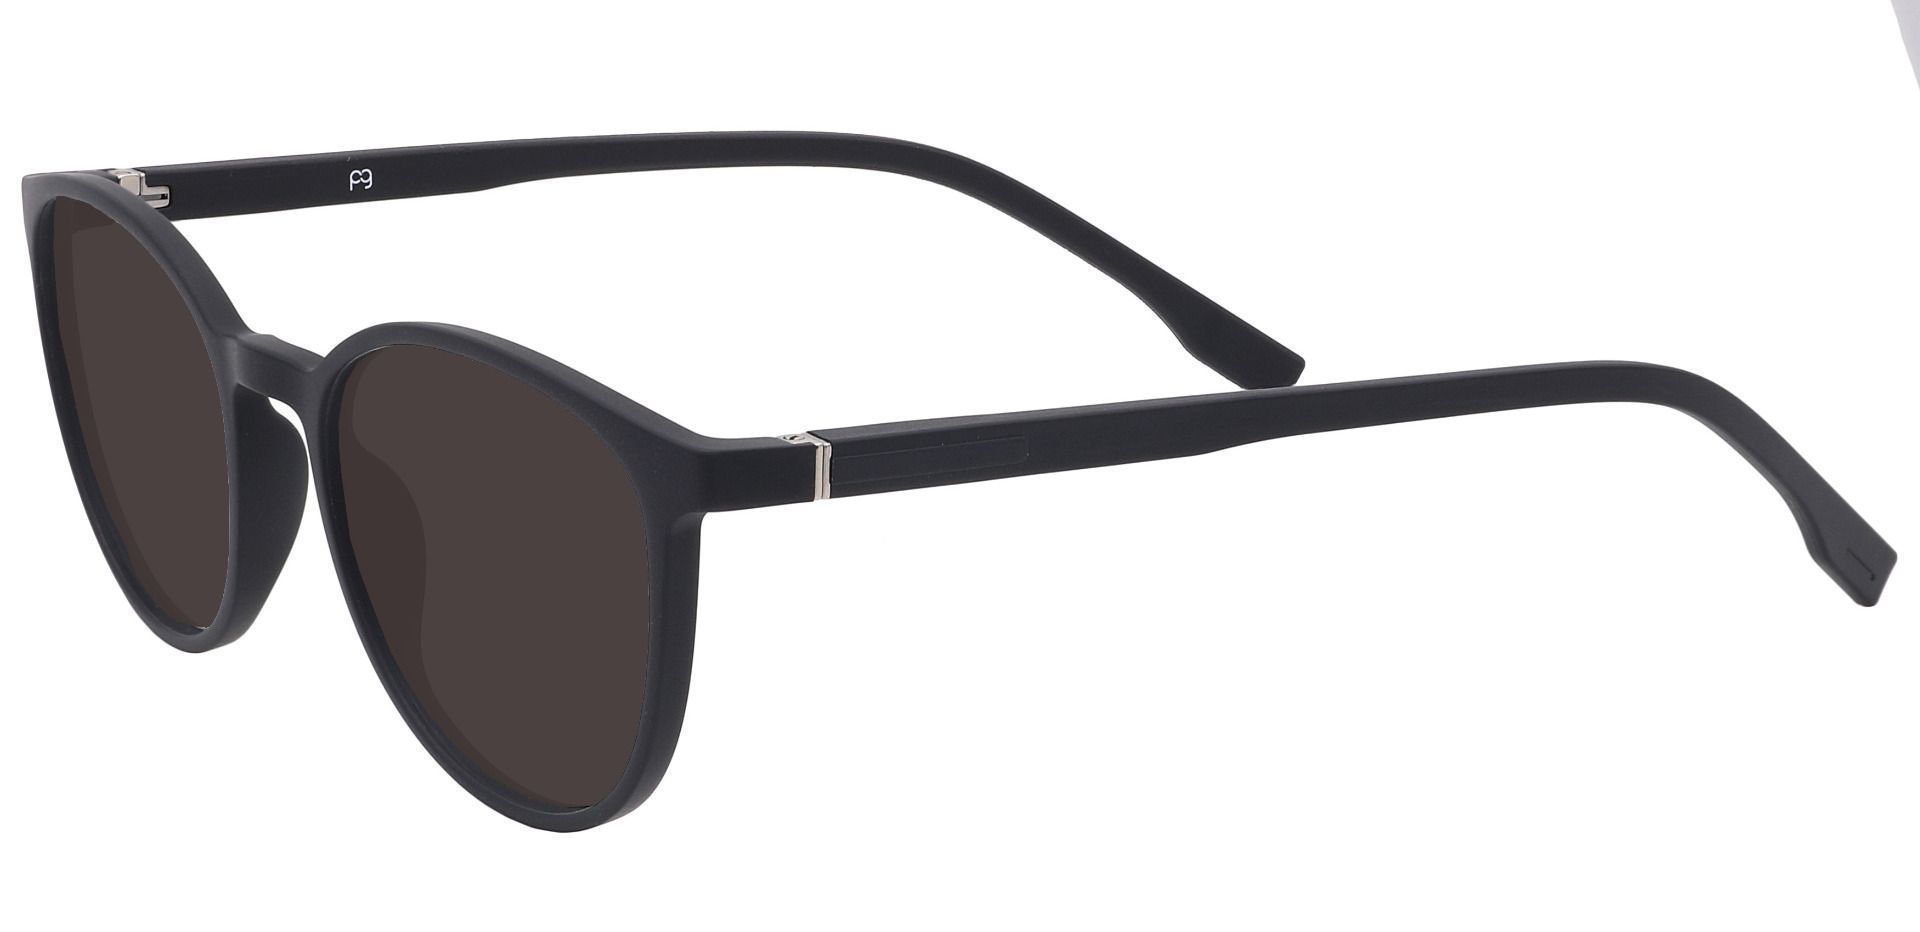 Bay Round Progressive Sunglasses - Black Frame With Gray Lenses